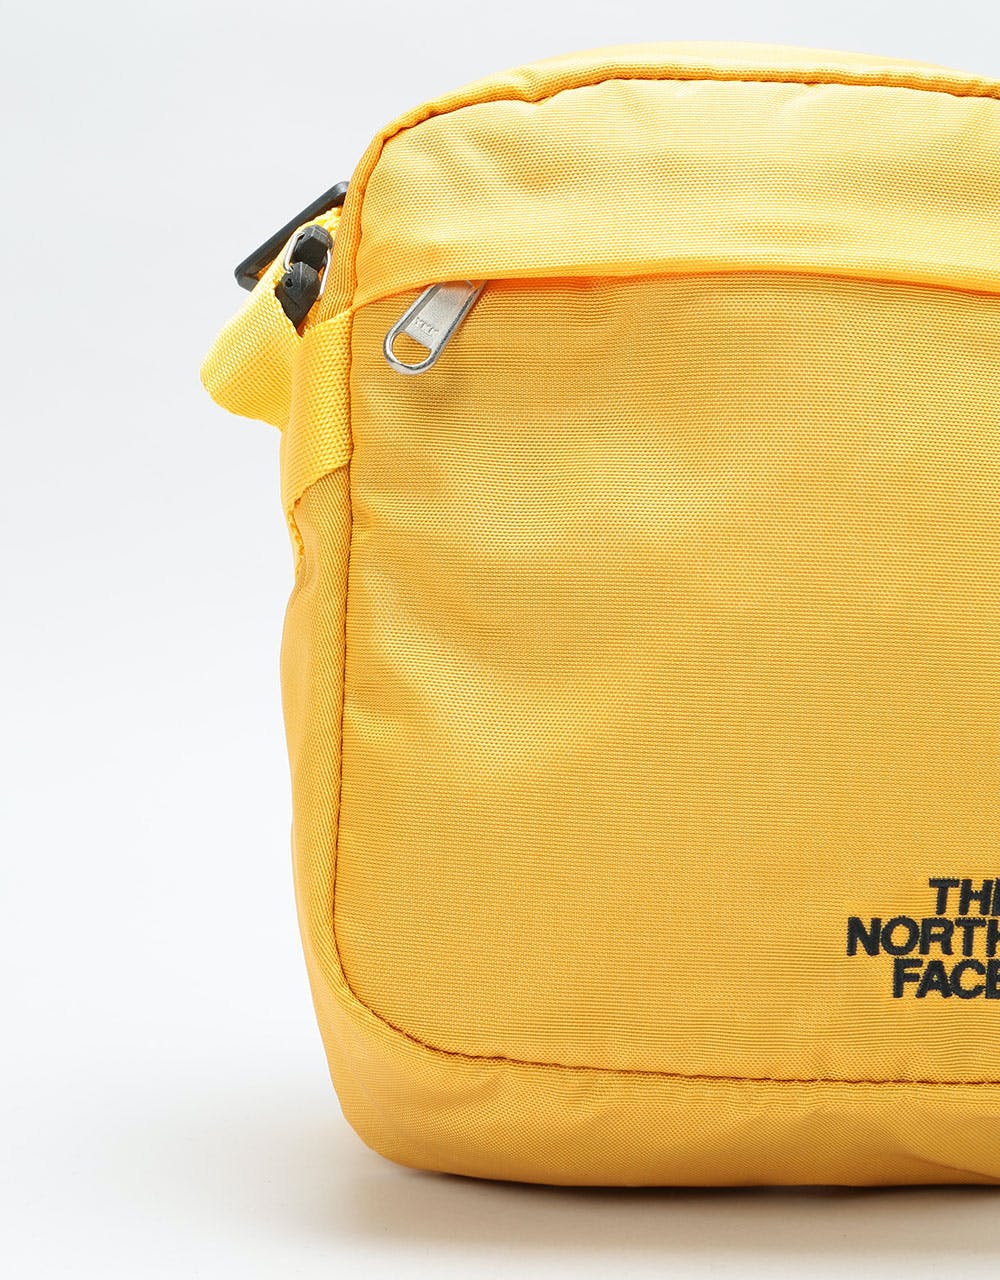 The North Face Convertible Cross Body Bag - TNF Yellow/TNF Black